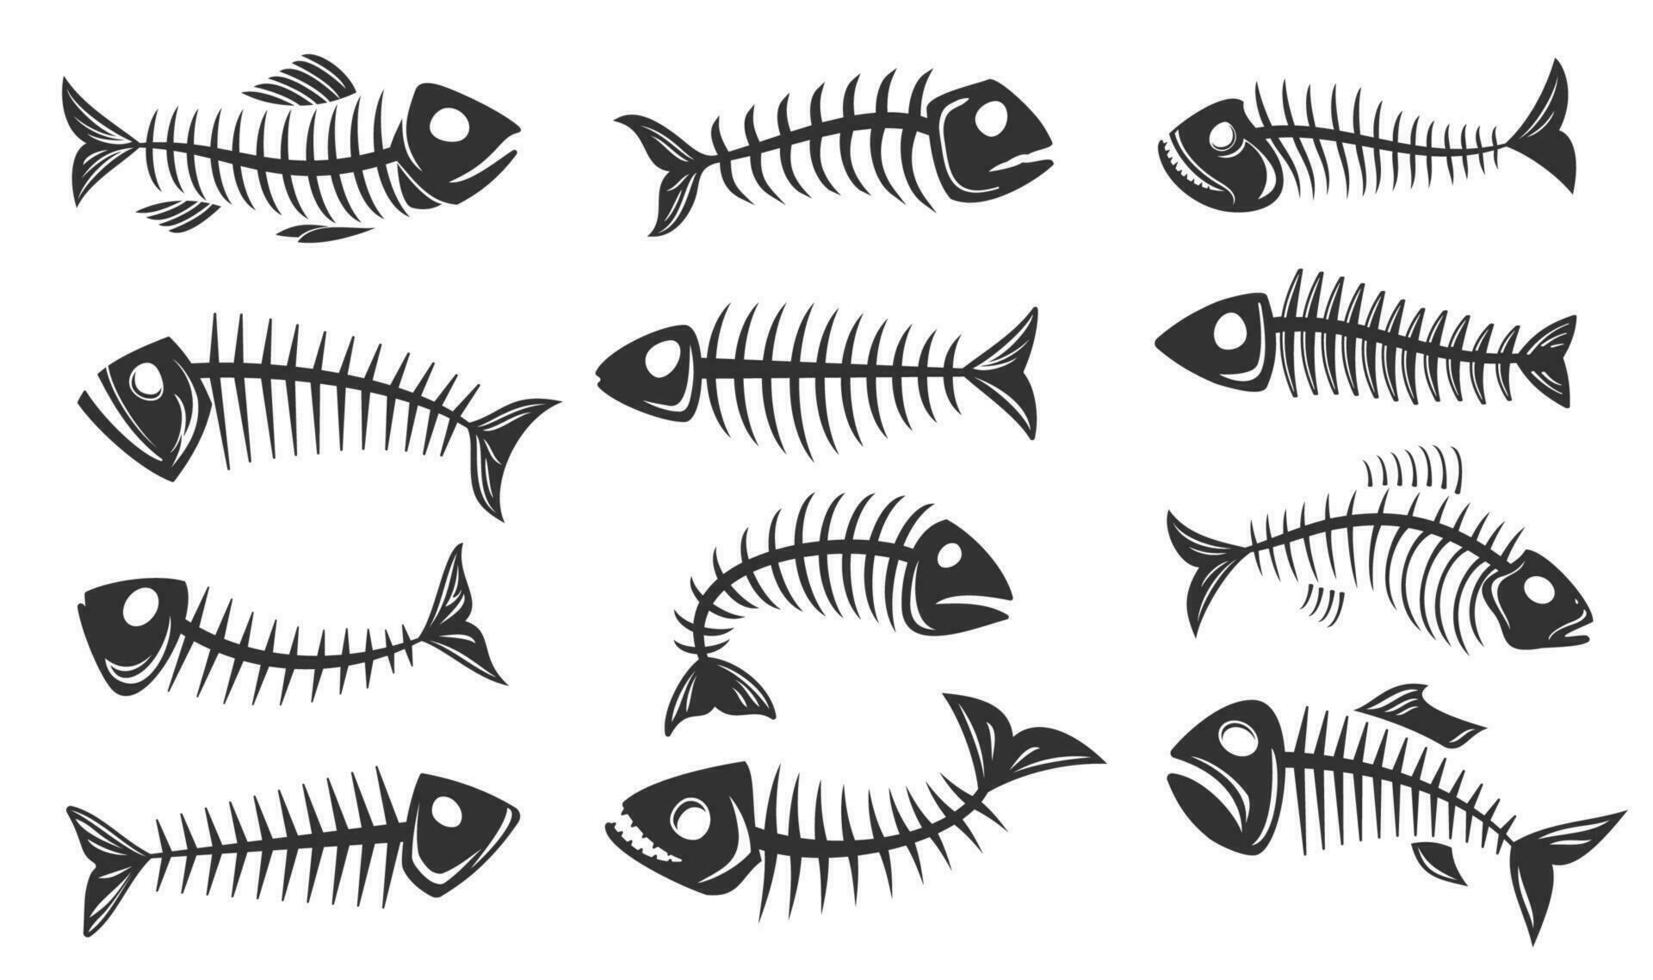 Fish bone icons, fishbone skeleton silhouettes vector